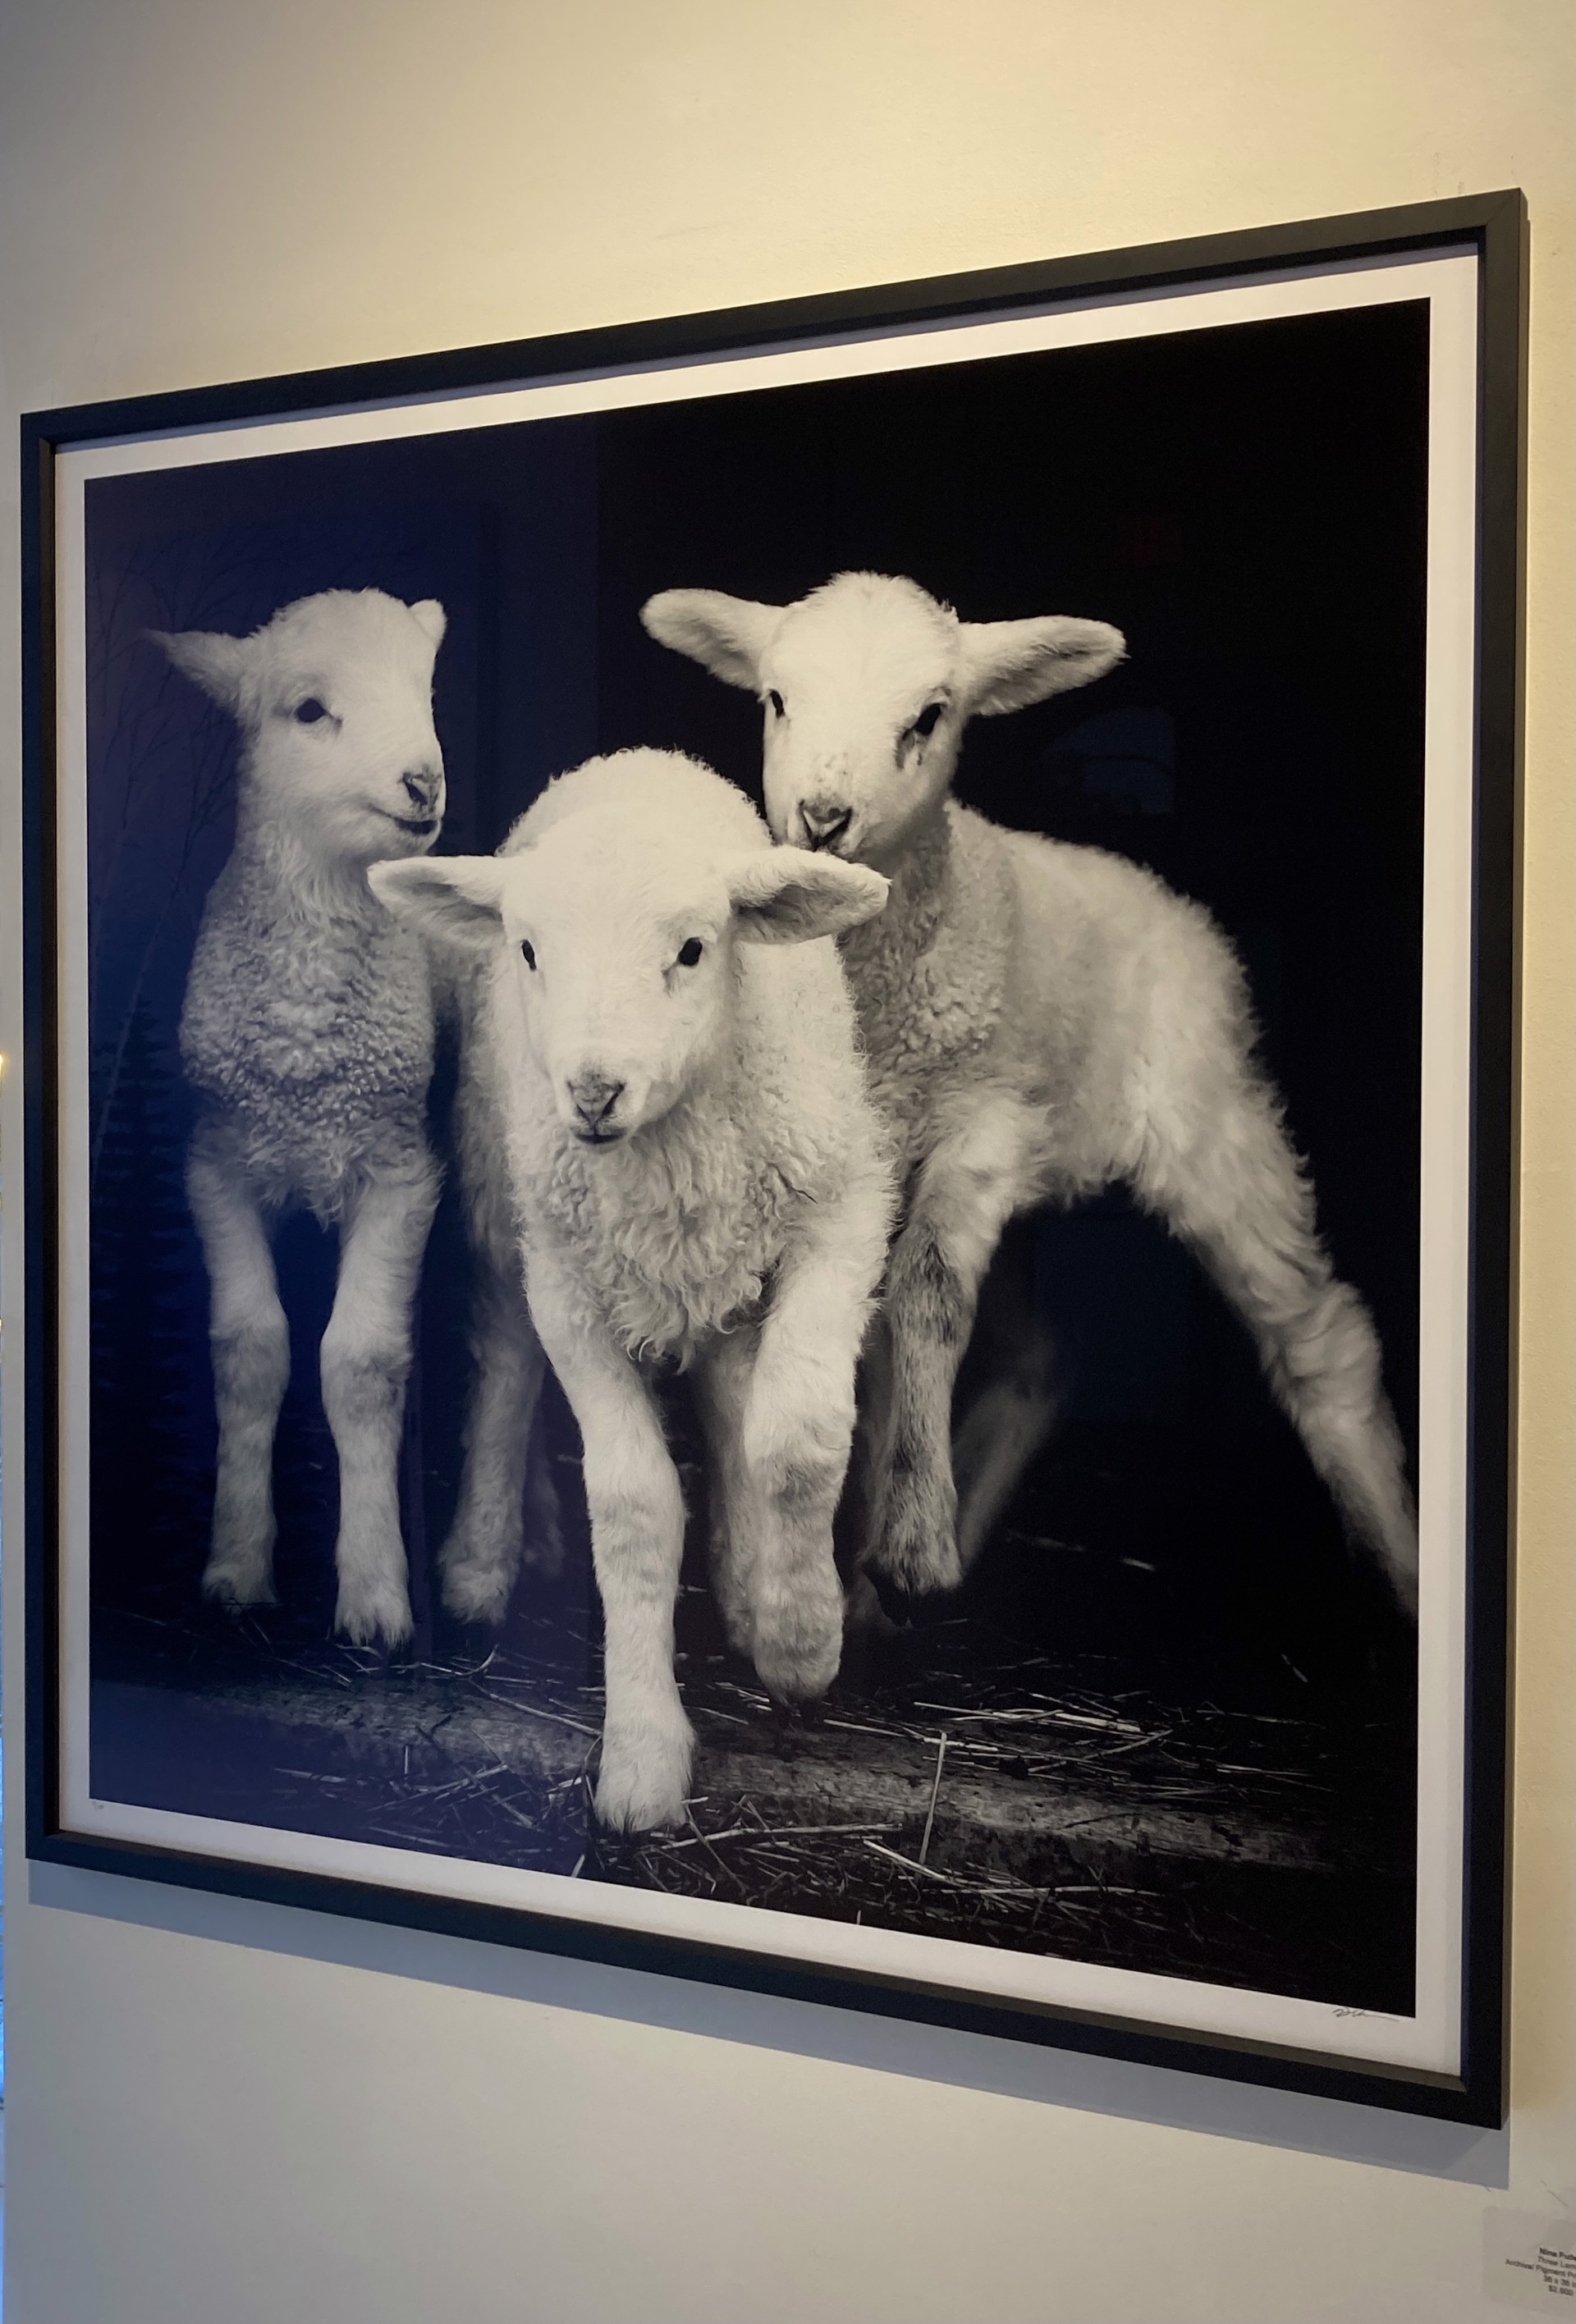 Three Lambs by Nina Fuller